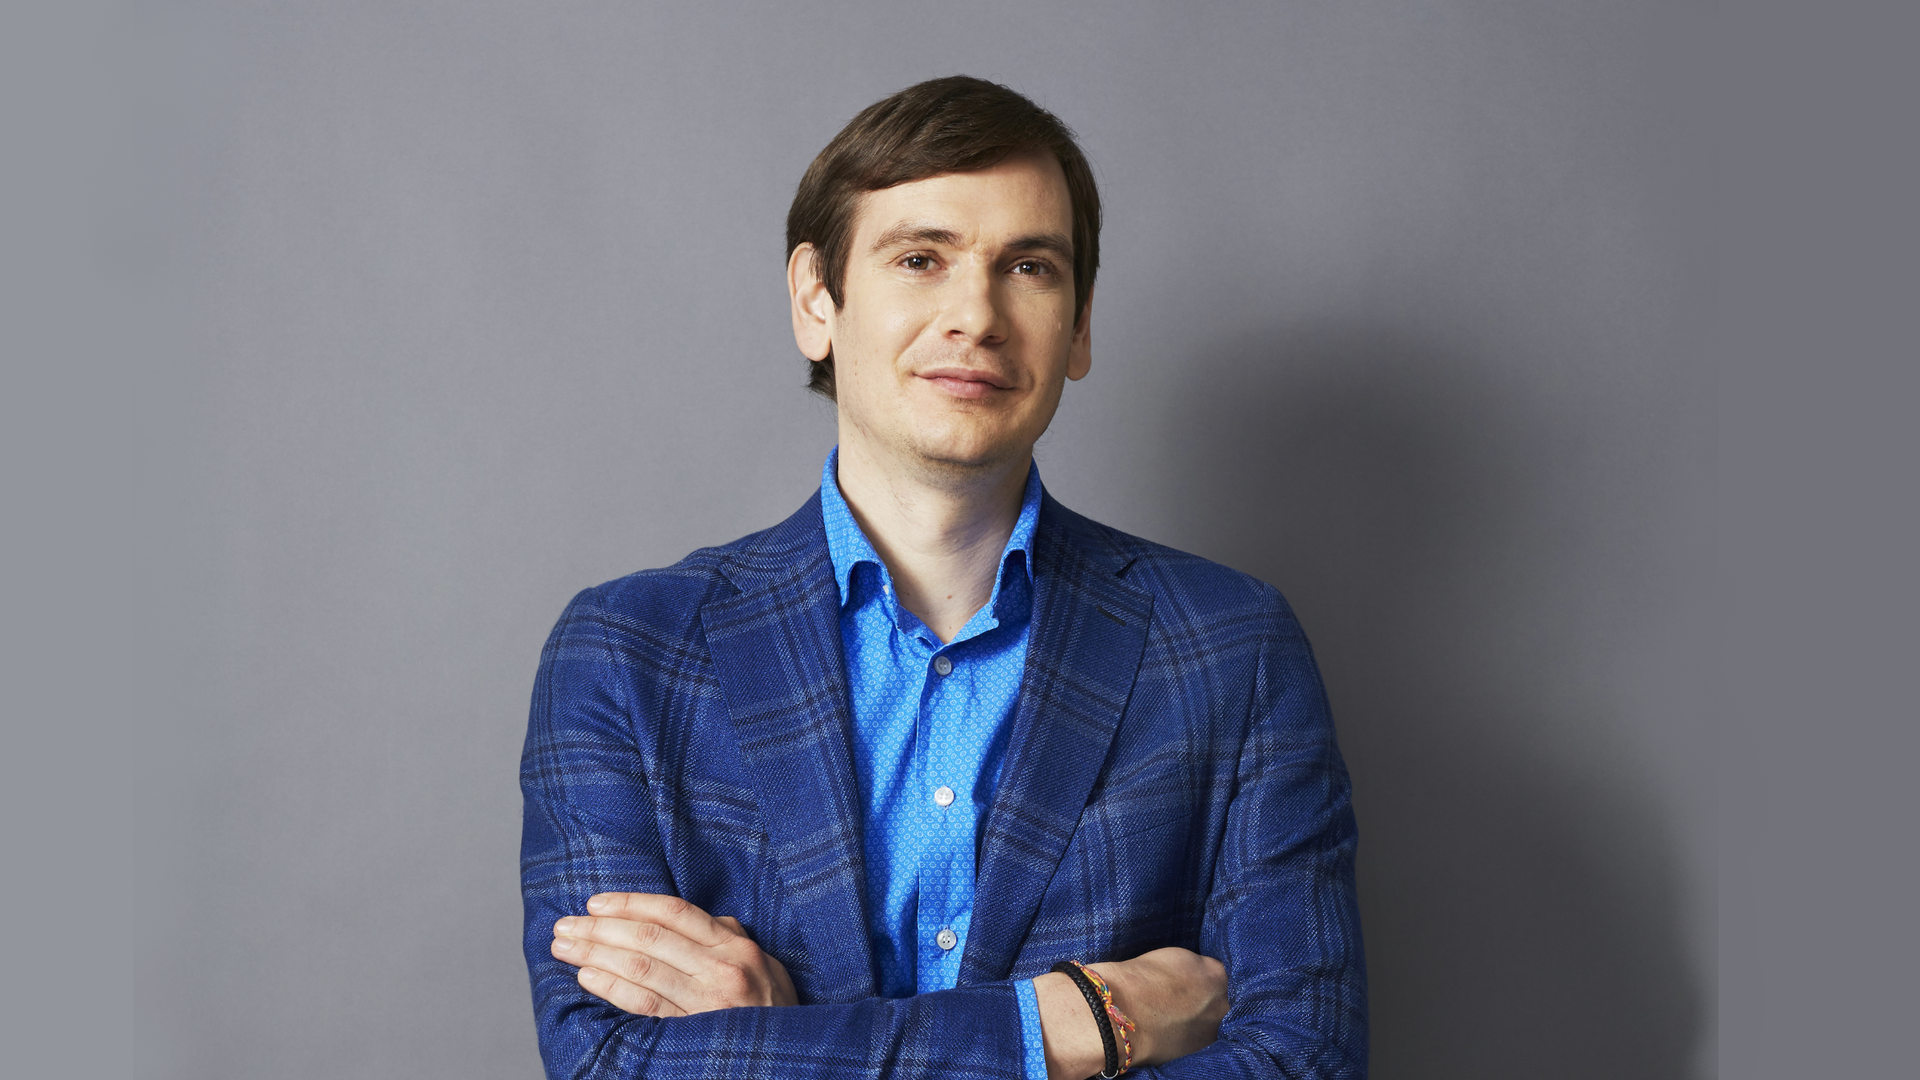 Artem Yamanov, Mitgründer von Vivid Money | Foto: Vivid Money